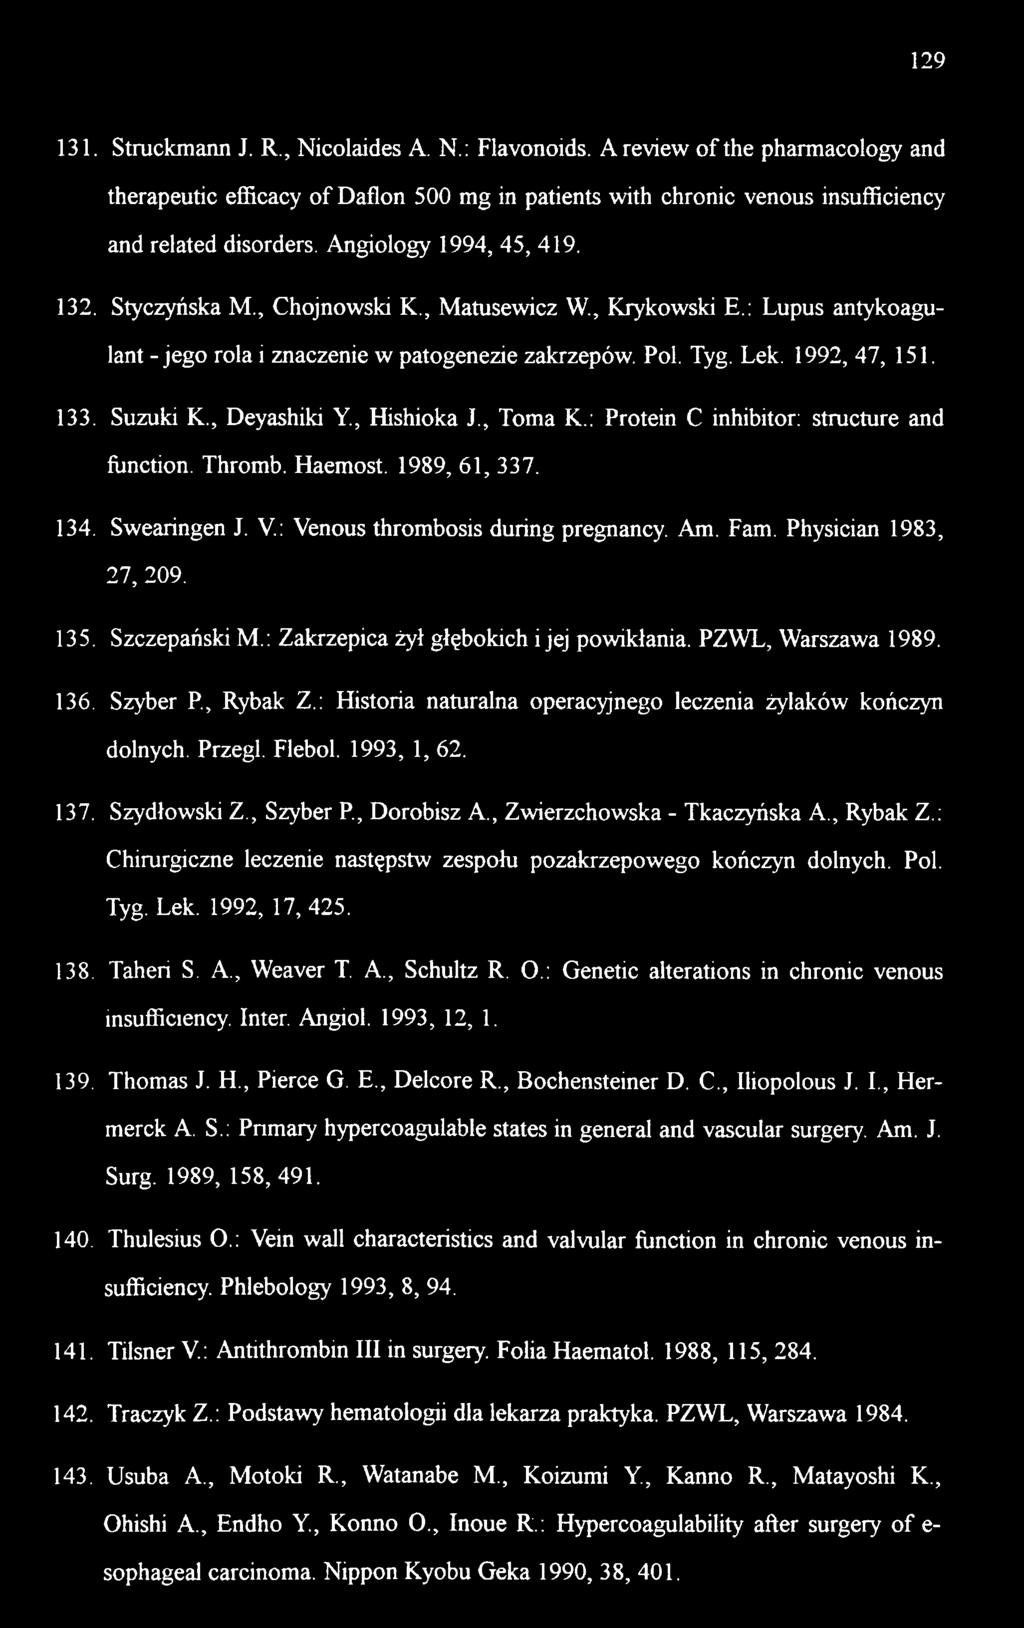 Suzuki K., Deyashiki Y, Hishioka J., Toma K.; Protein C inhibitor; structure and flmction. Thromb. Haemost. 1989, 61, 337. 134. Swearingen J. V.: Yenous thrombosis during pregnancy. Am. Fam.